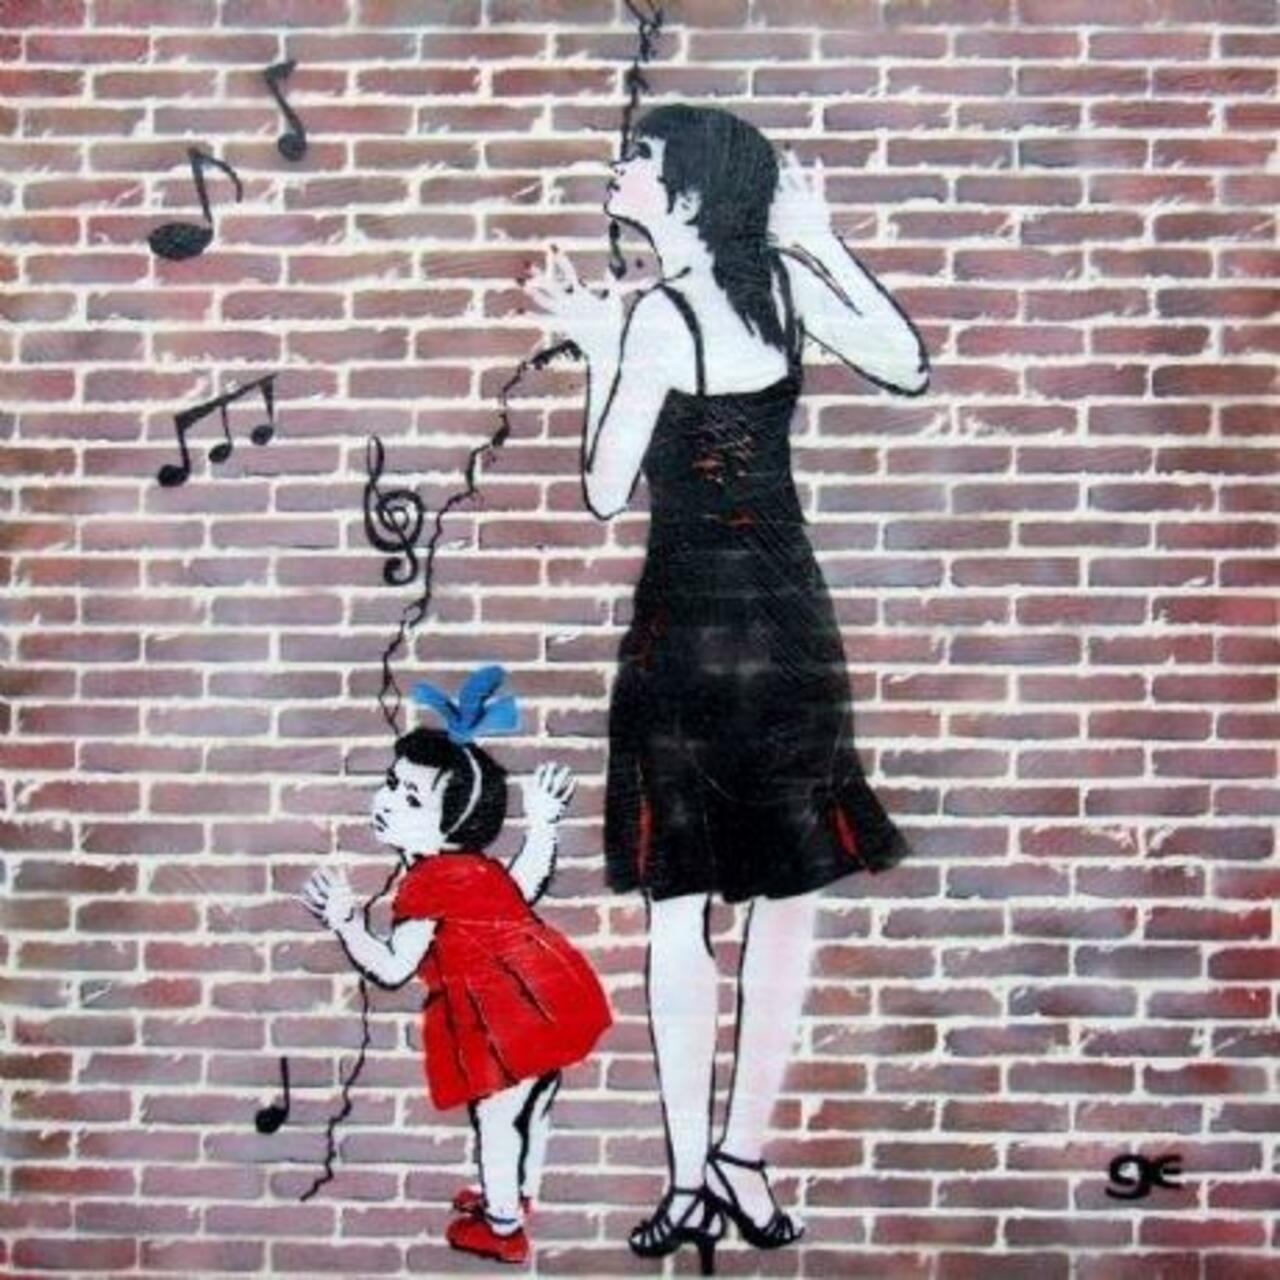 RT @wtomycolors: “@CmoaXWoman: Music and #streetart 2  #urbanart #stencil http://t.co/YkxPwuXmlK” #graffiti #urbanart #mural #art #aerosol